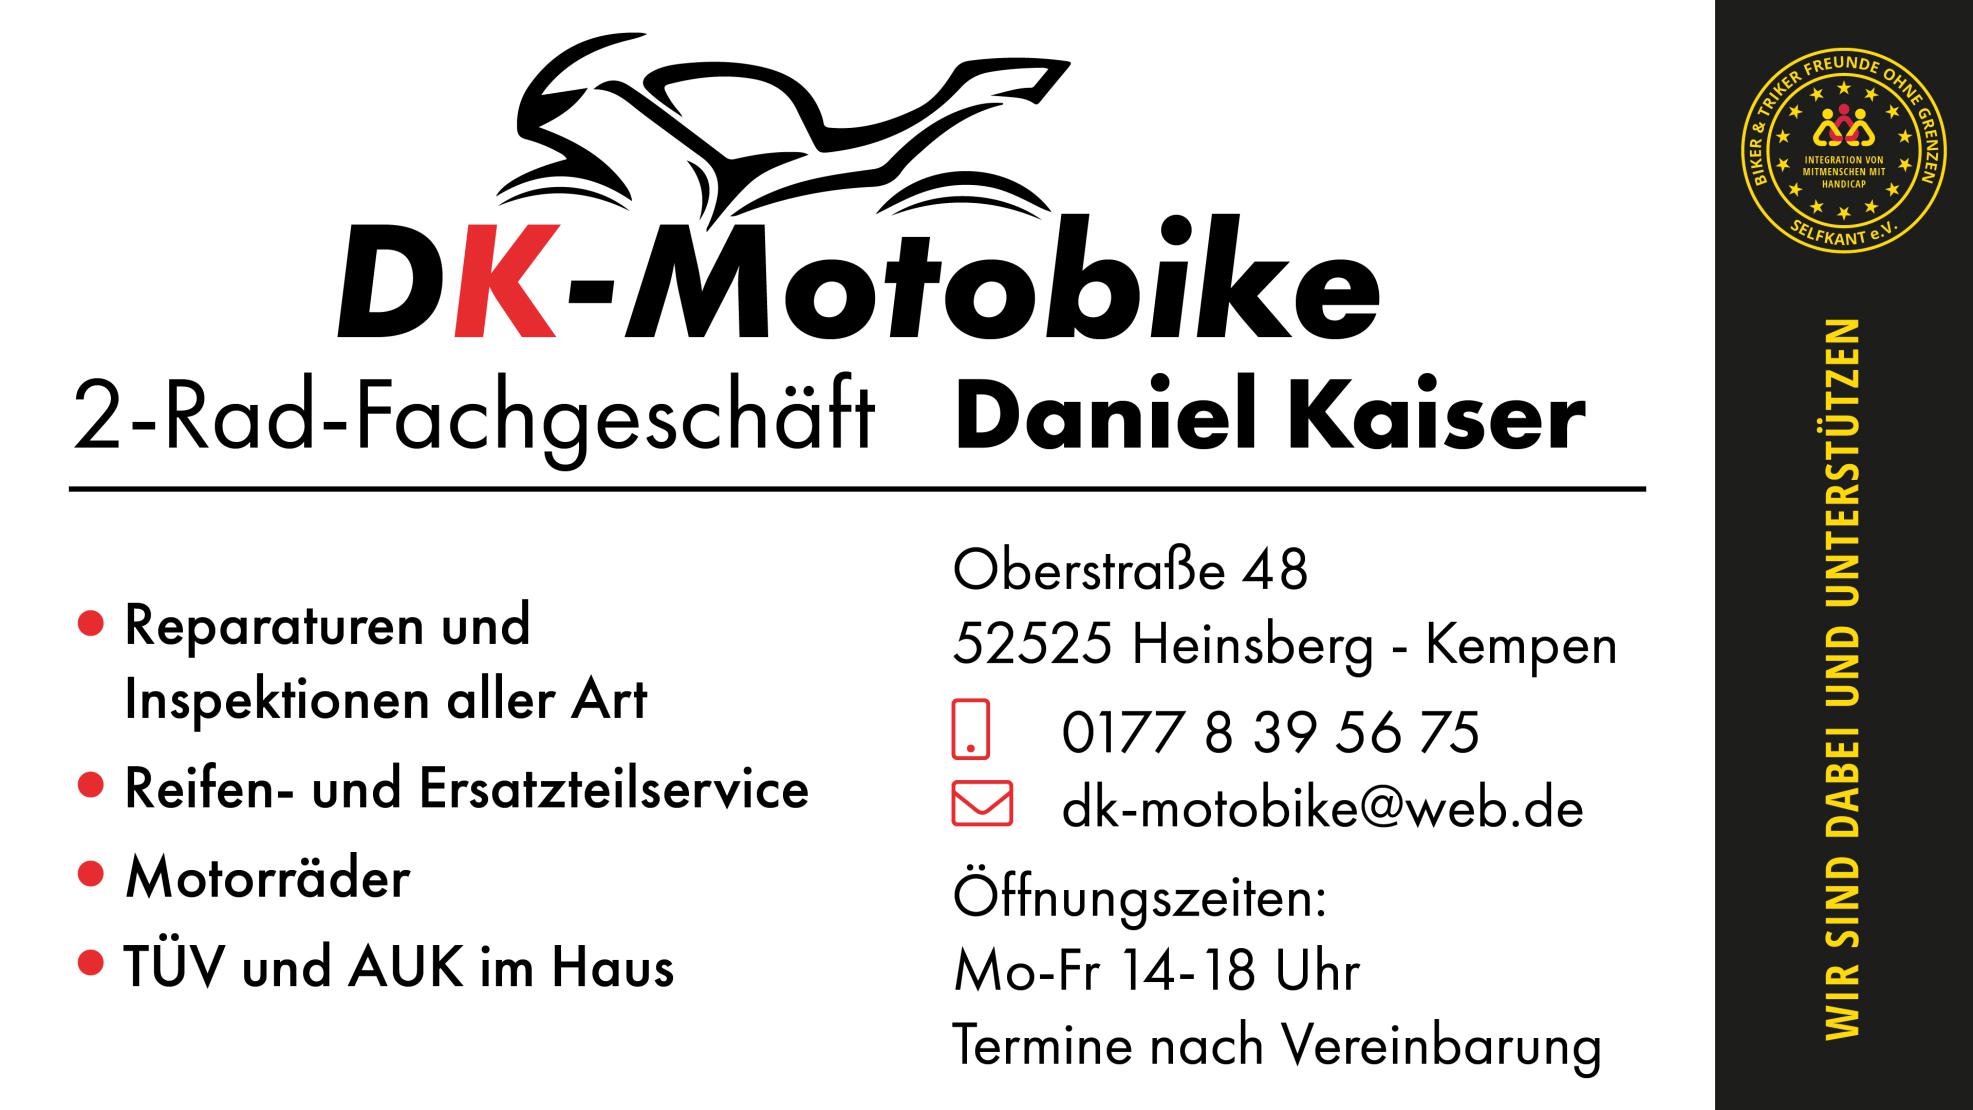 DK Motobike